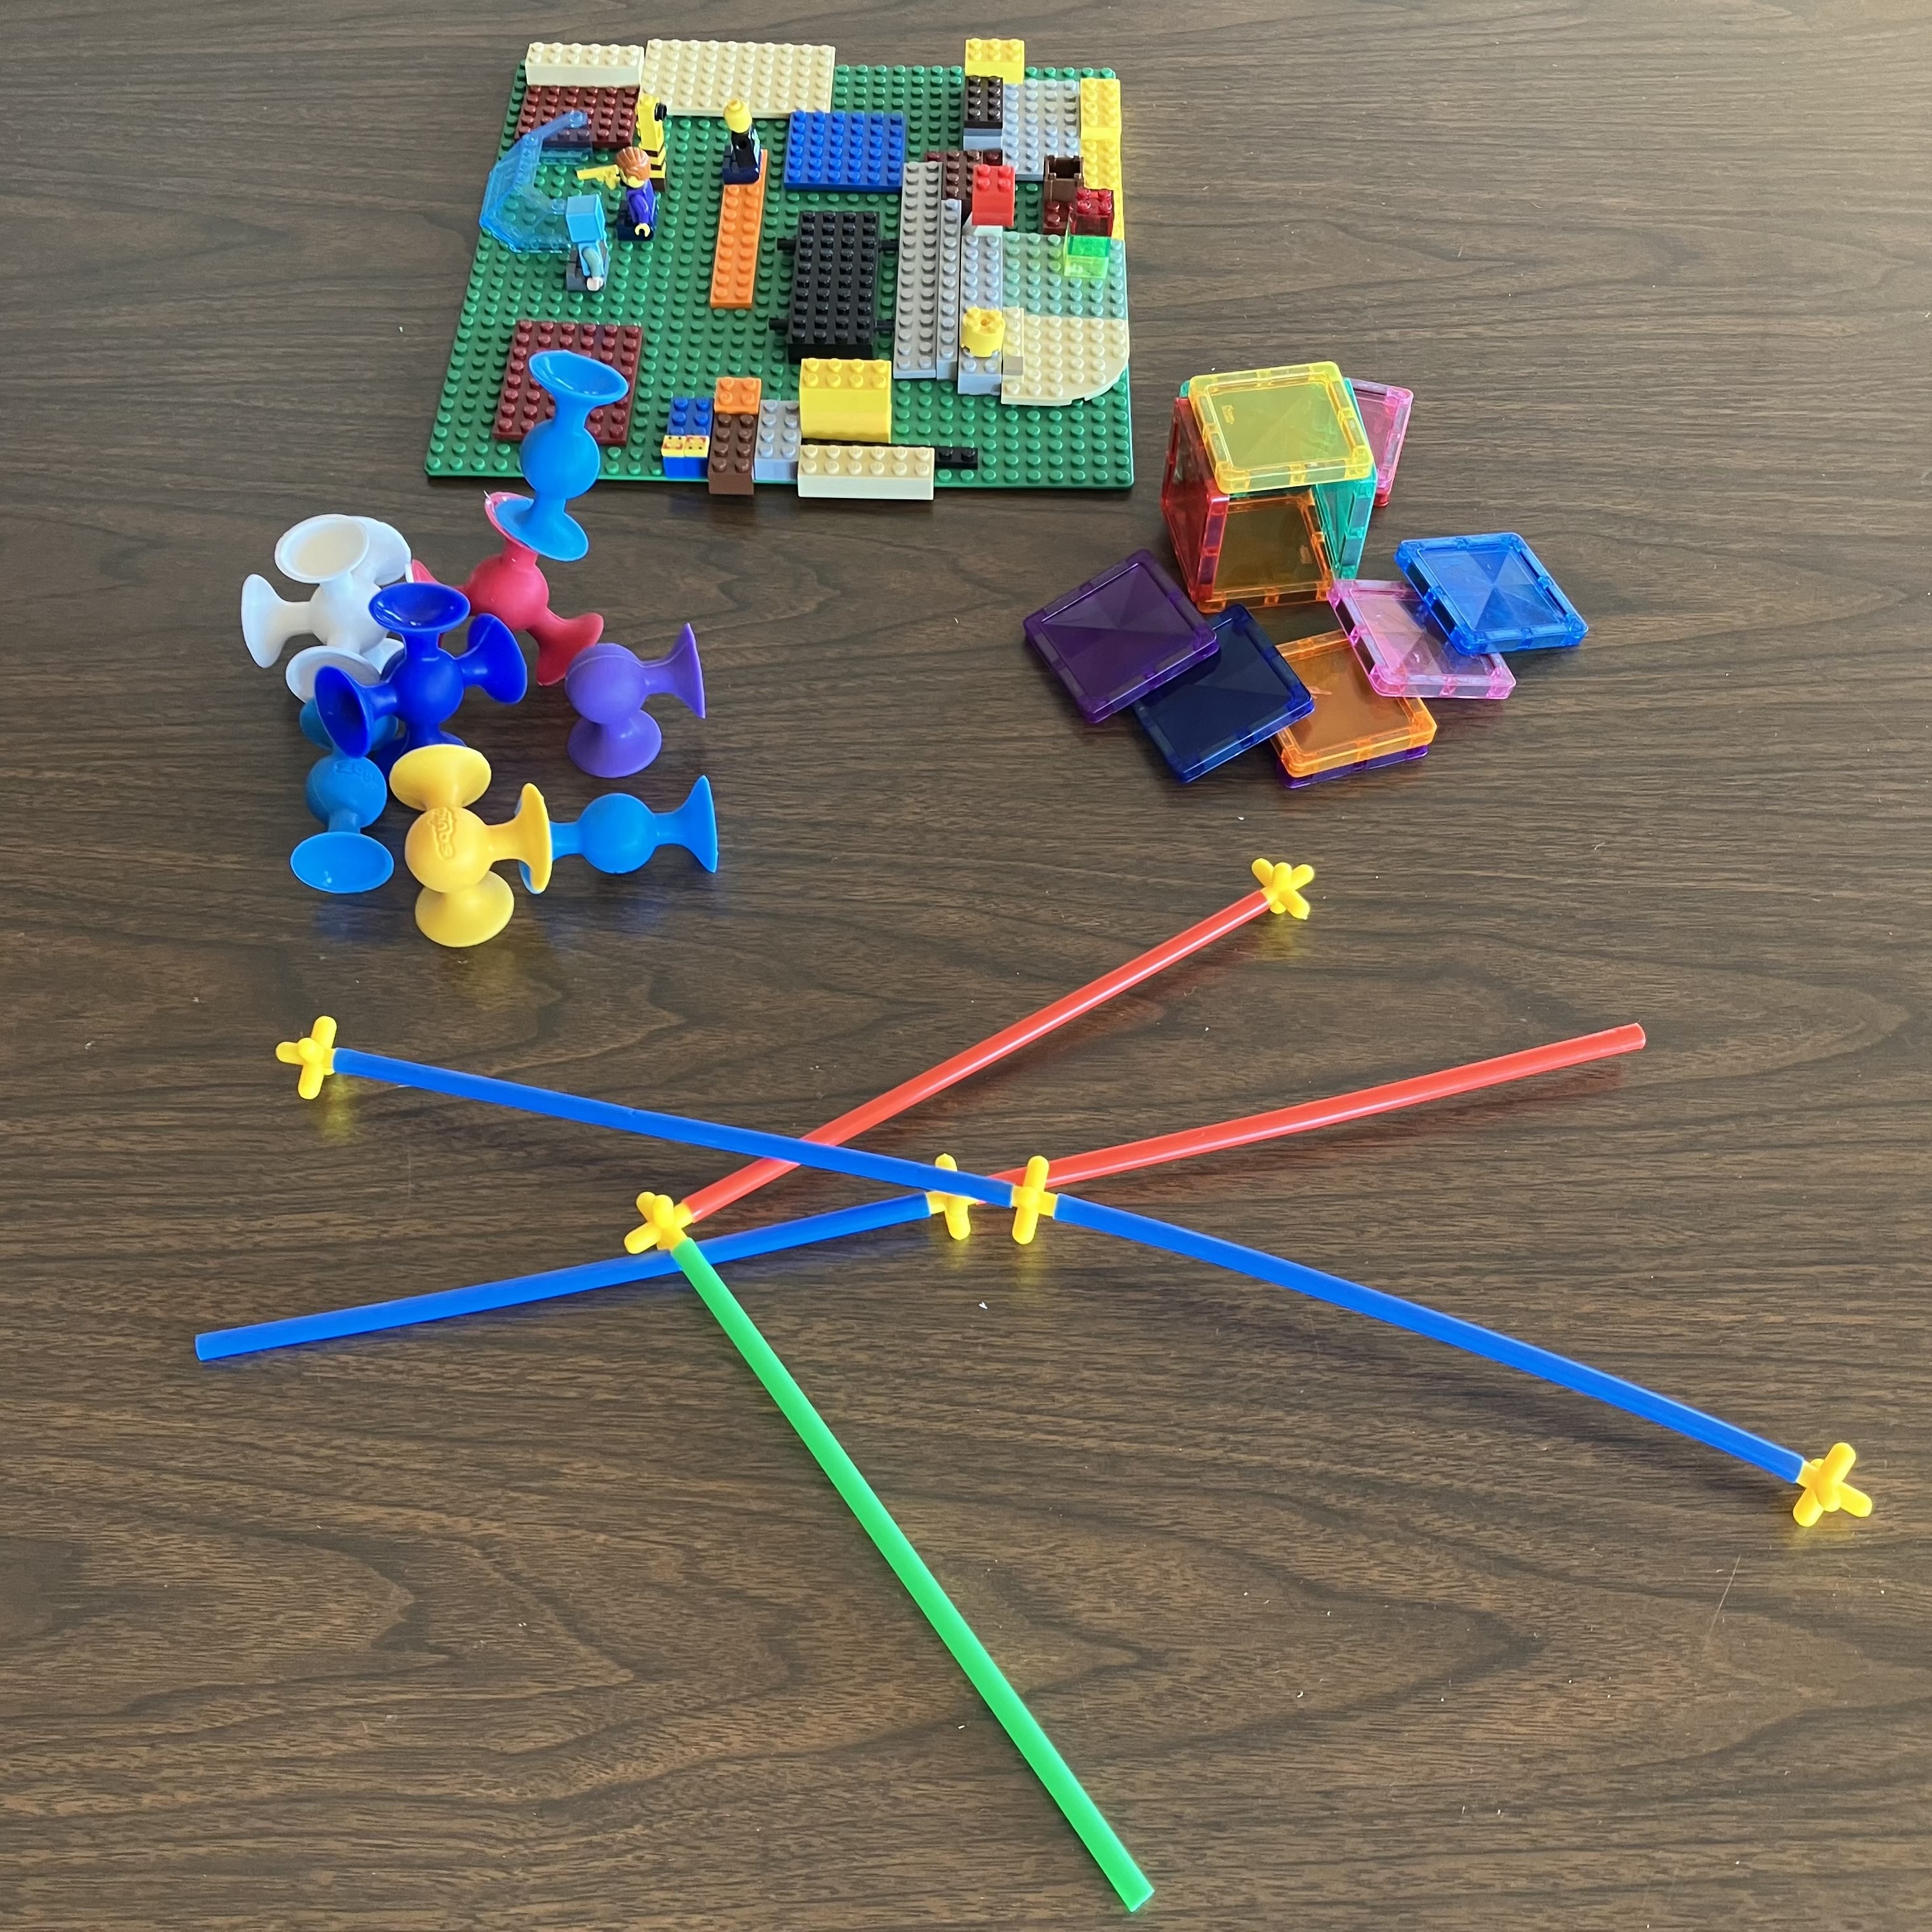 Legos, Magnetic Tiles, Squigz, and K'Nex